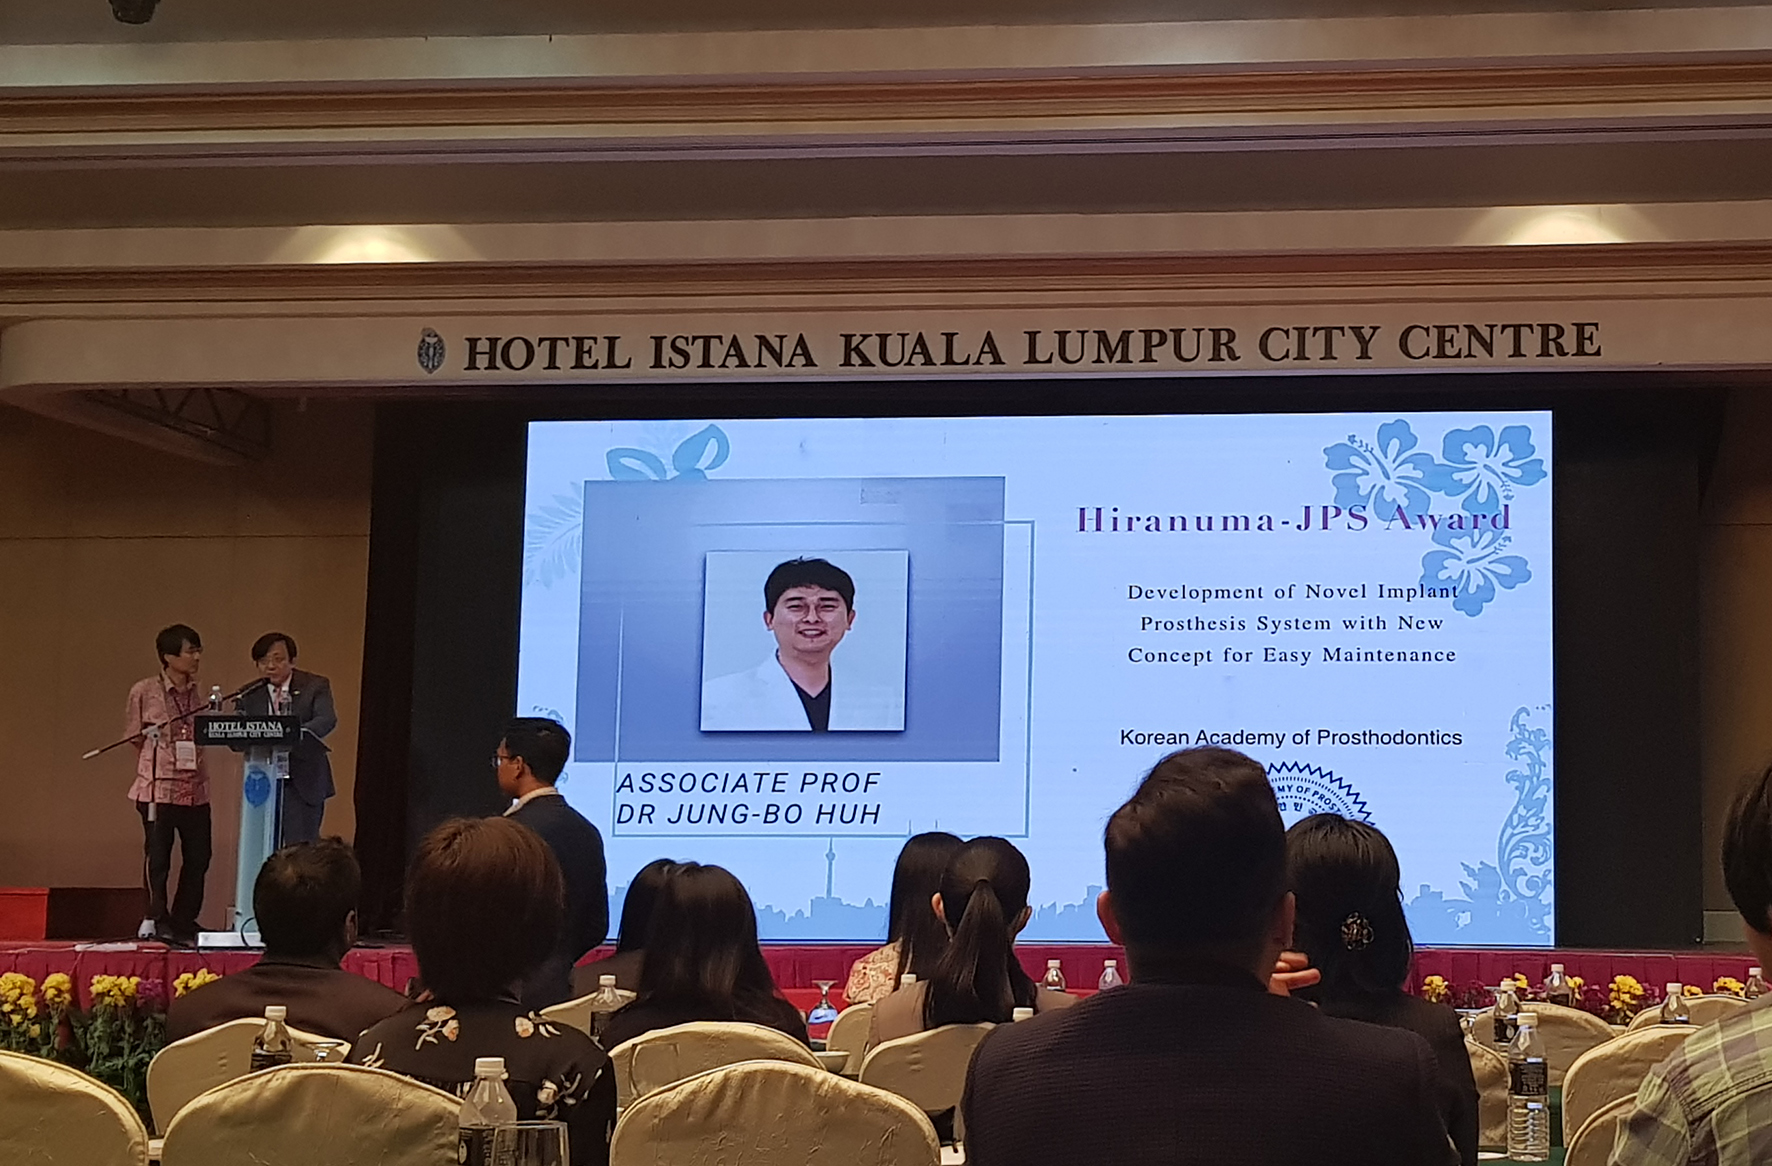 Professor Jung-Bo Huh of Asian Prosthodontics Award at HIRANUMA-JPS award attached image